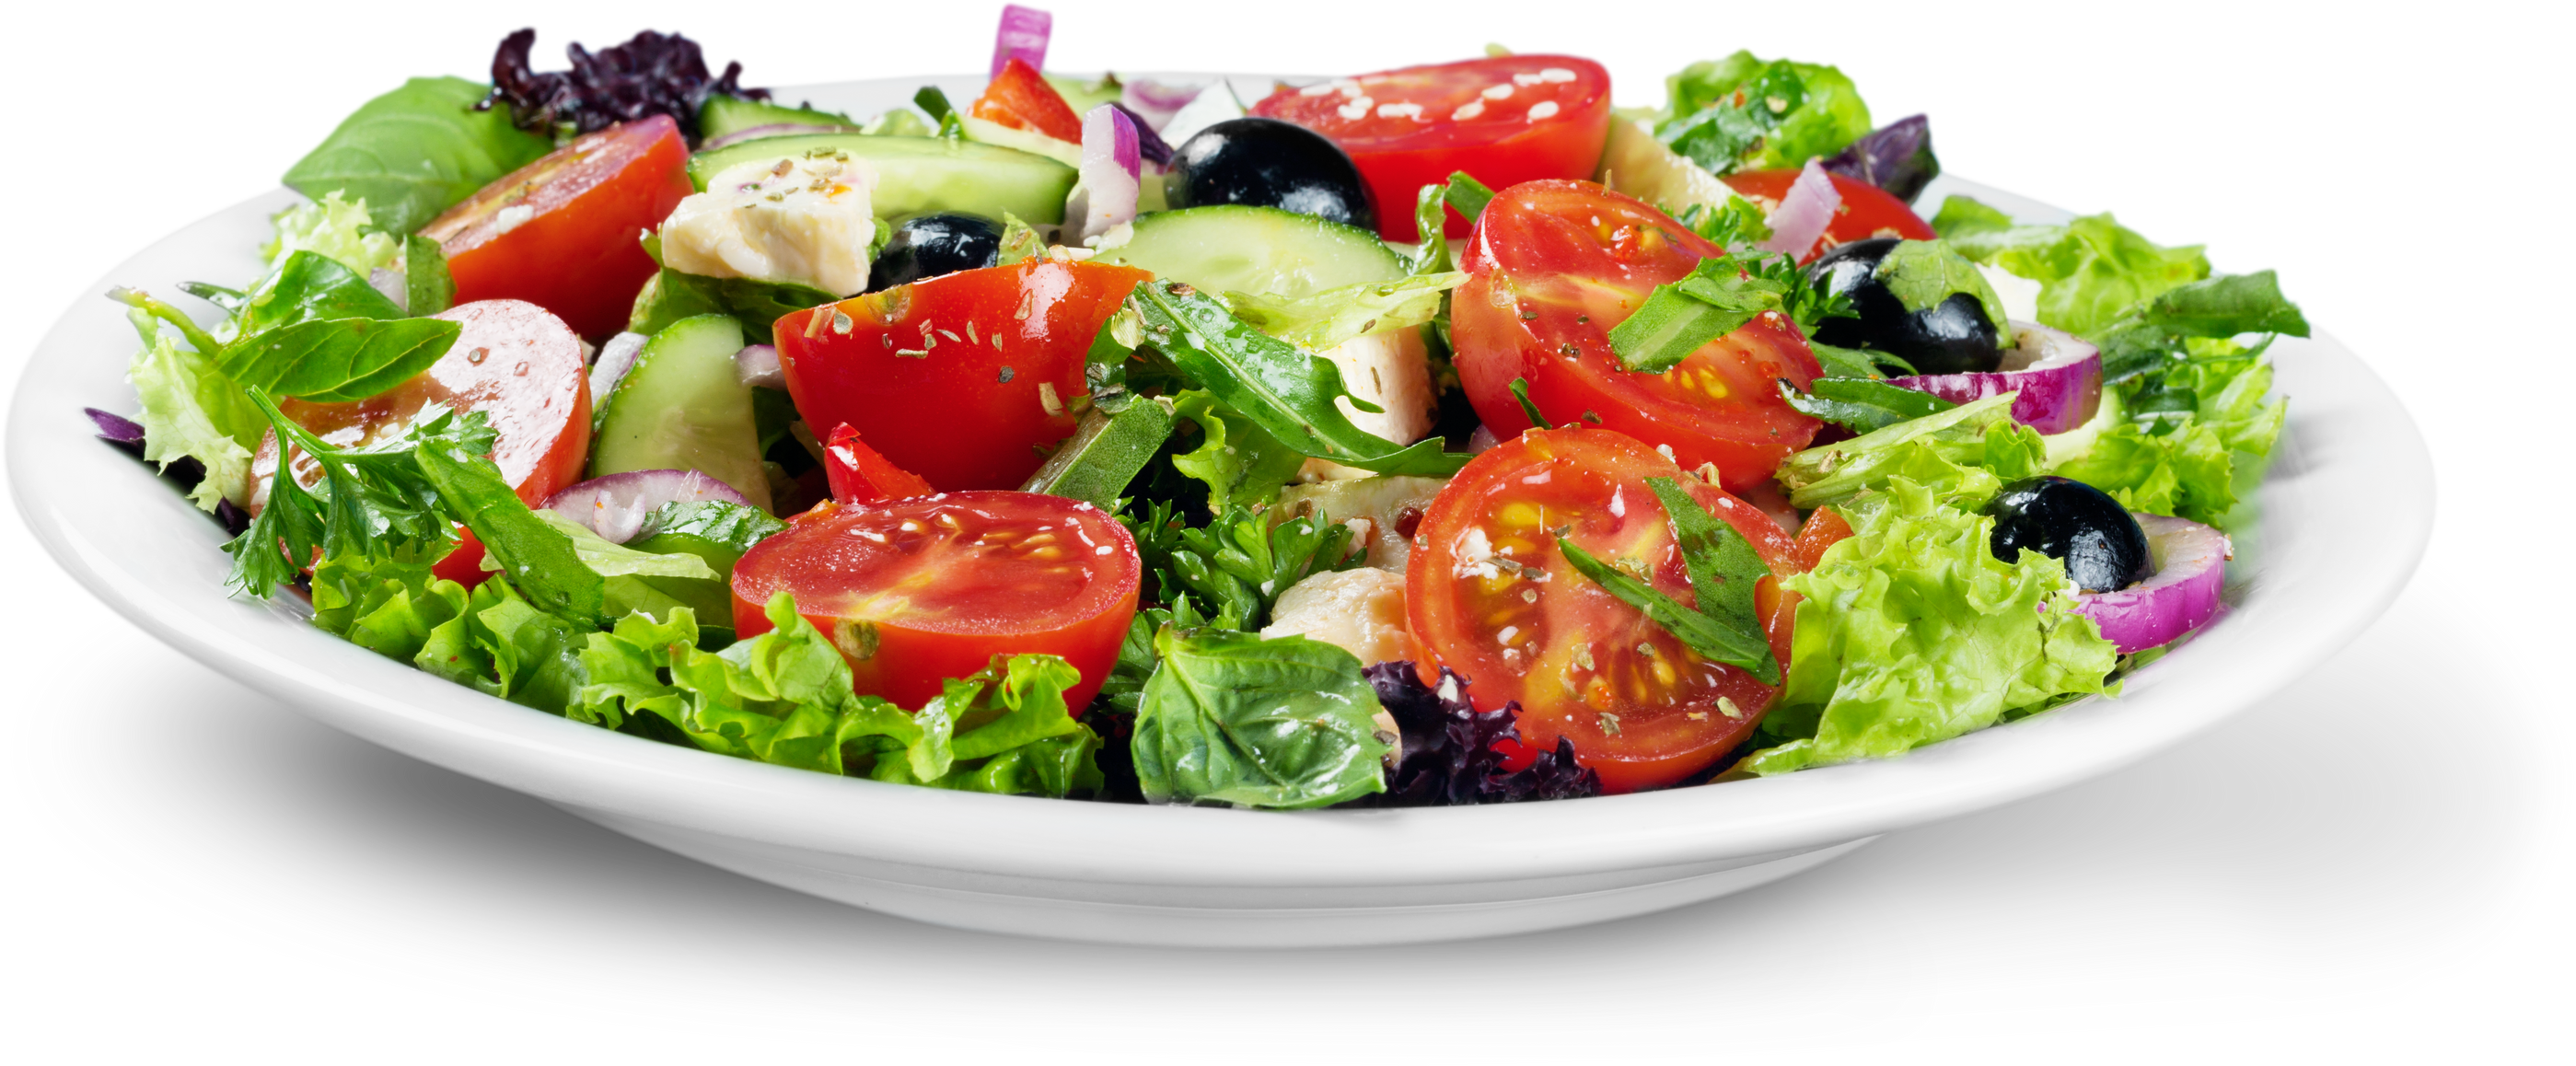 salad appetizer